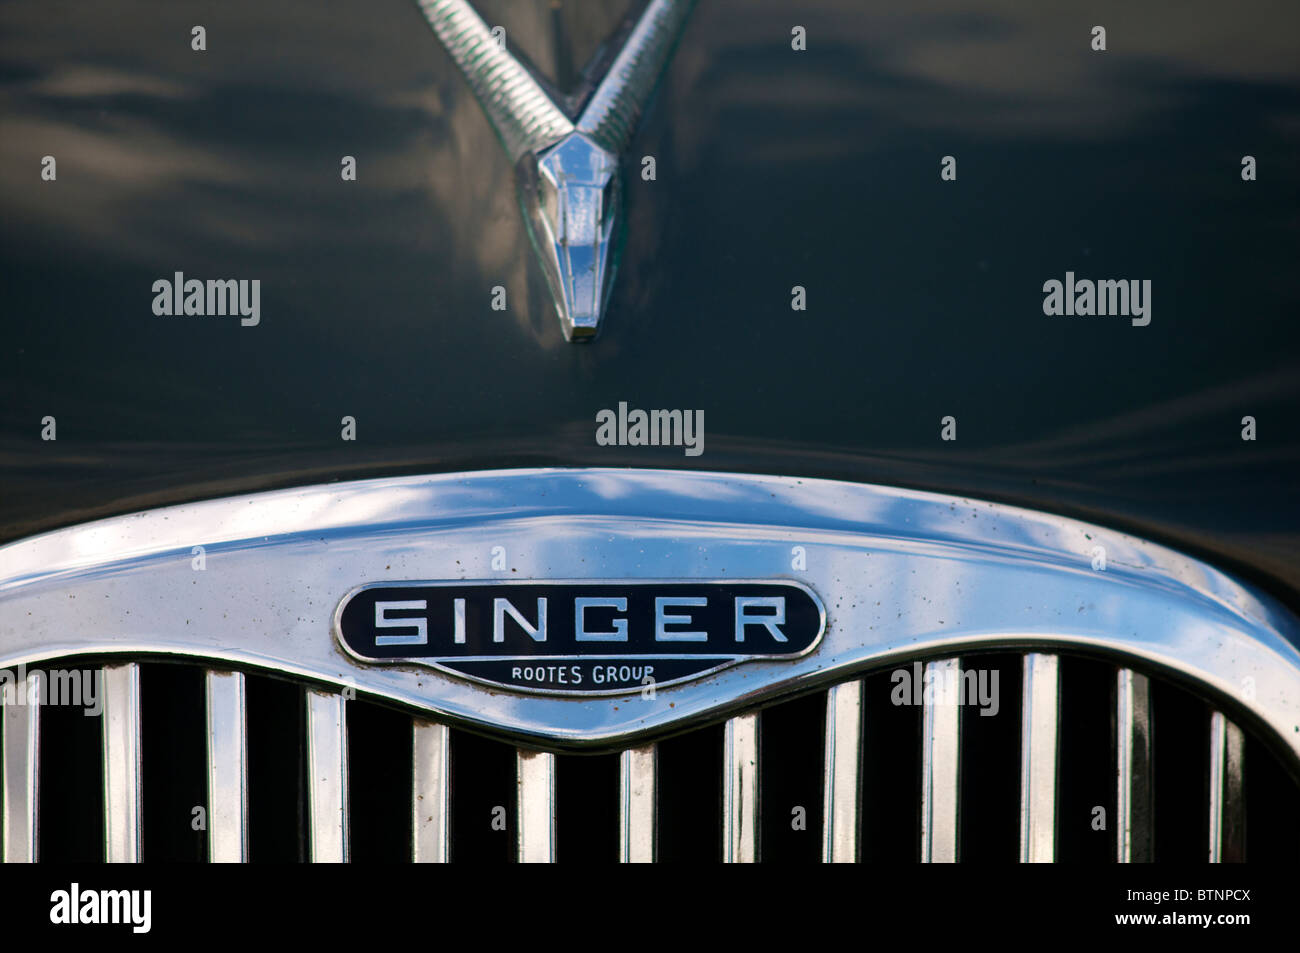 Rootes Group Singer car badge detail Stock Photo